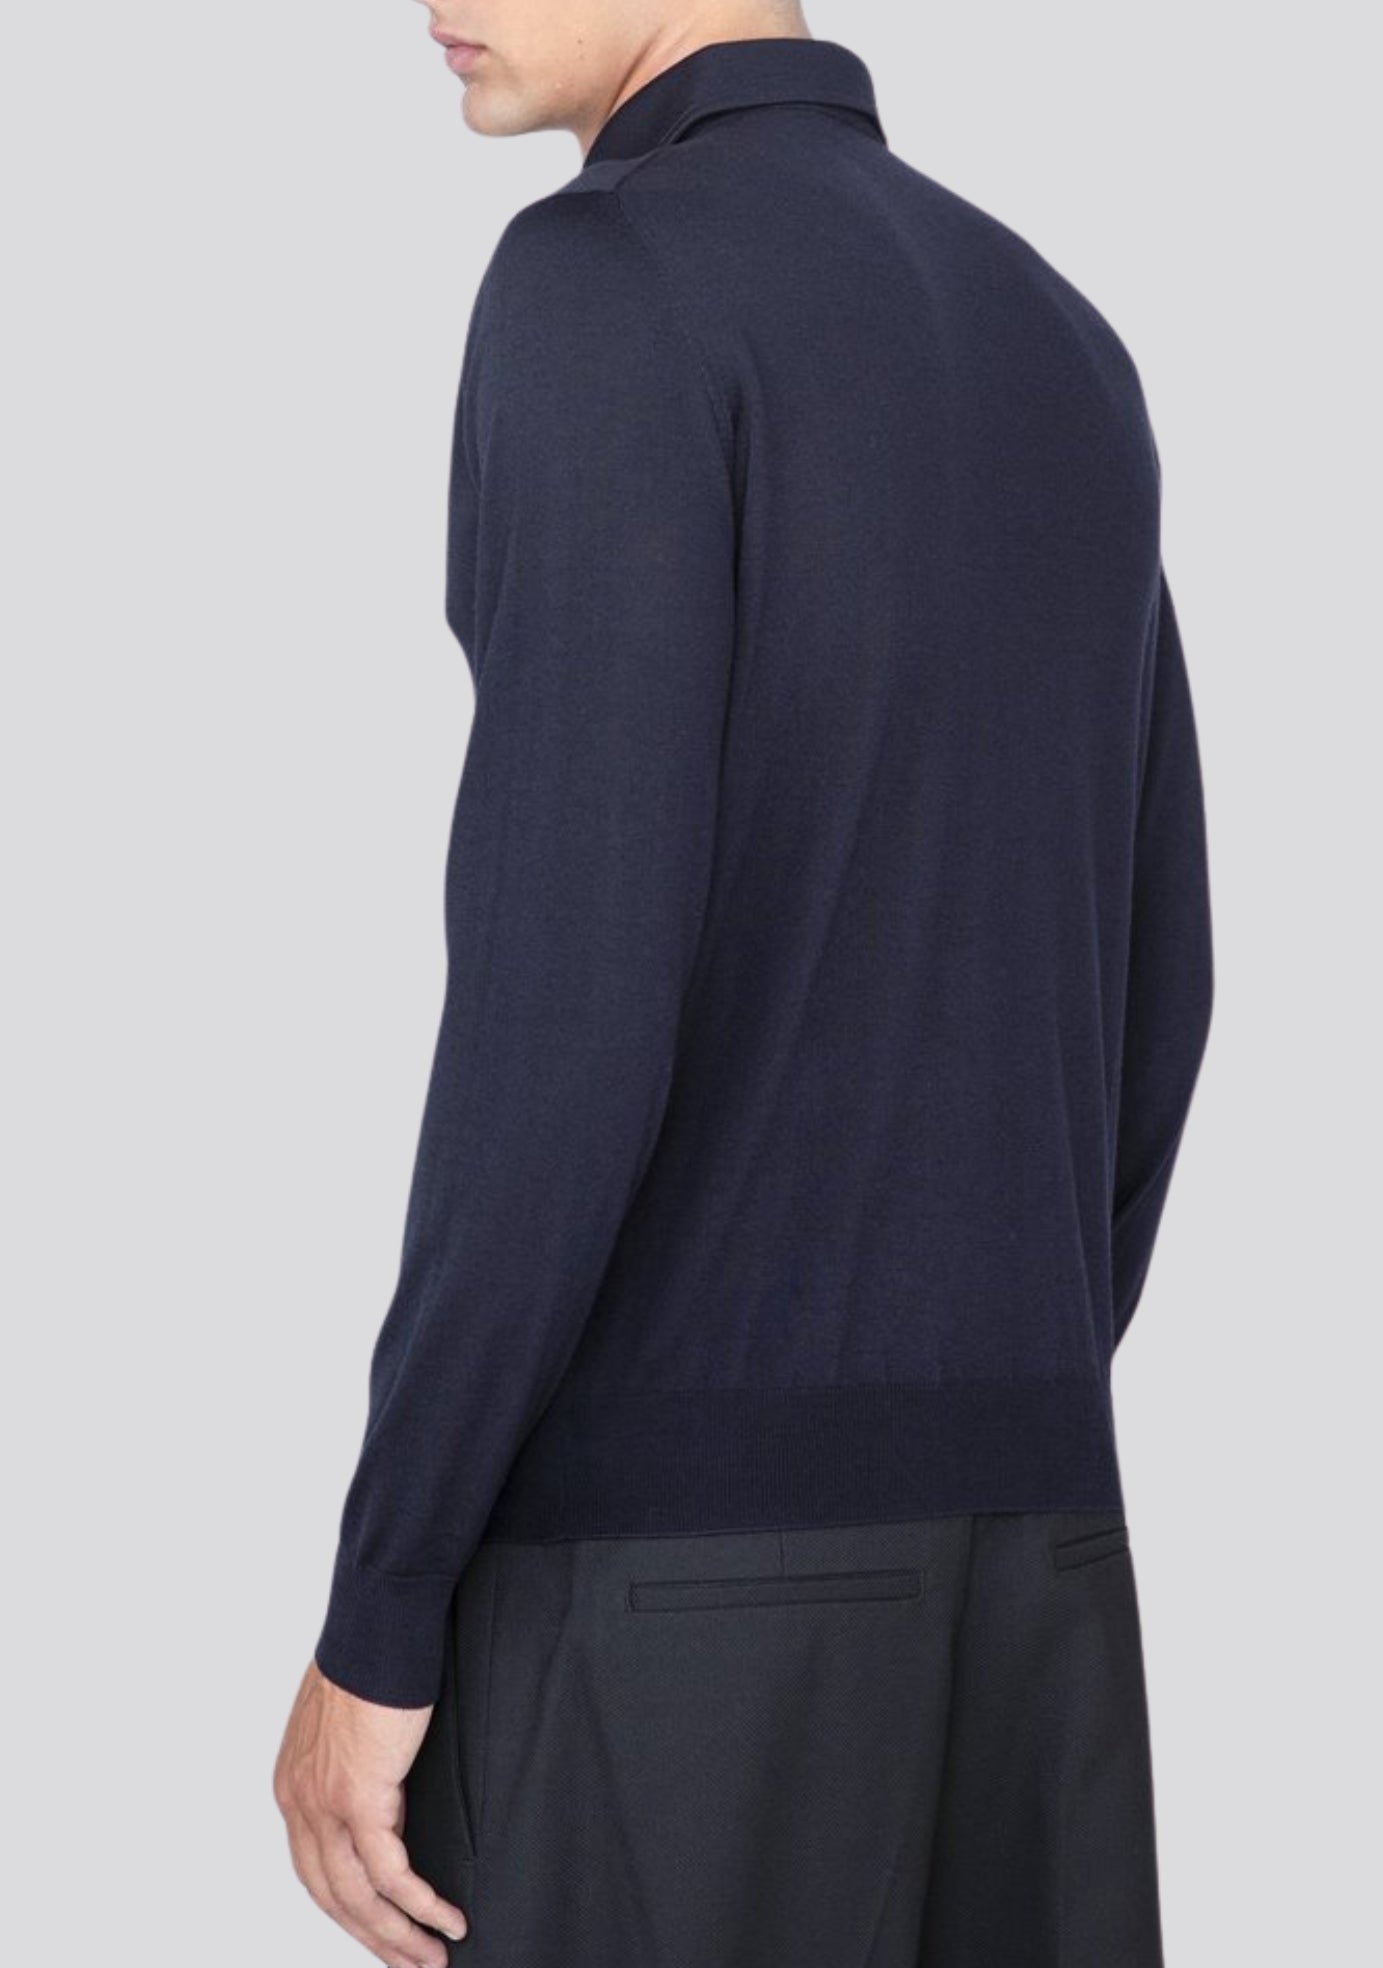 Long Sleeve Navy Blue Superfine 180s Merino Wool Polo Shirt